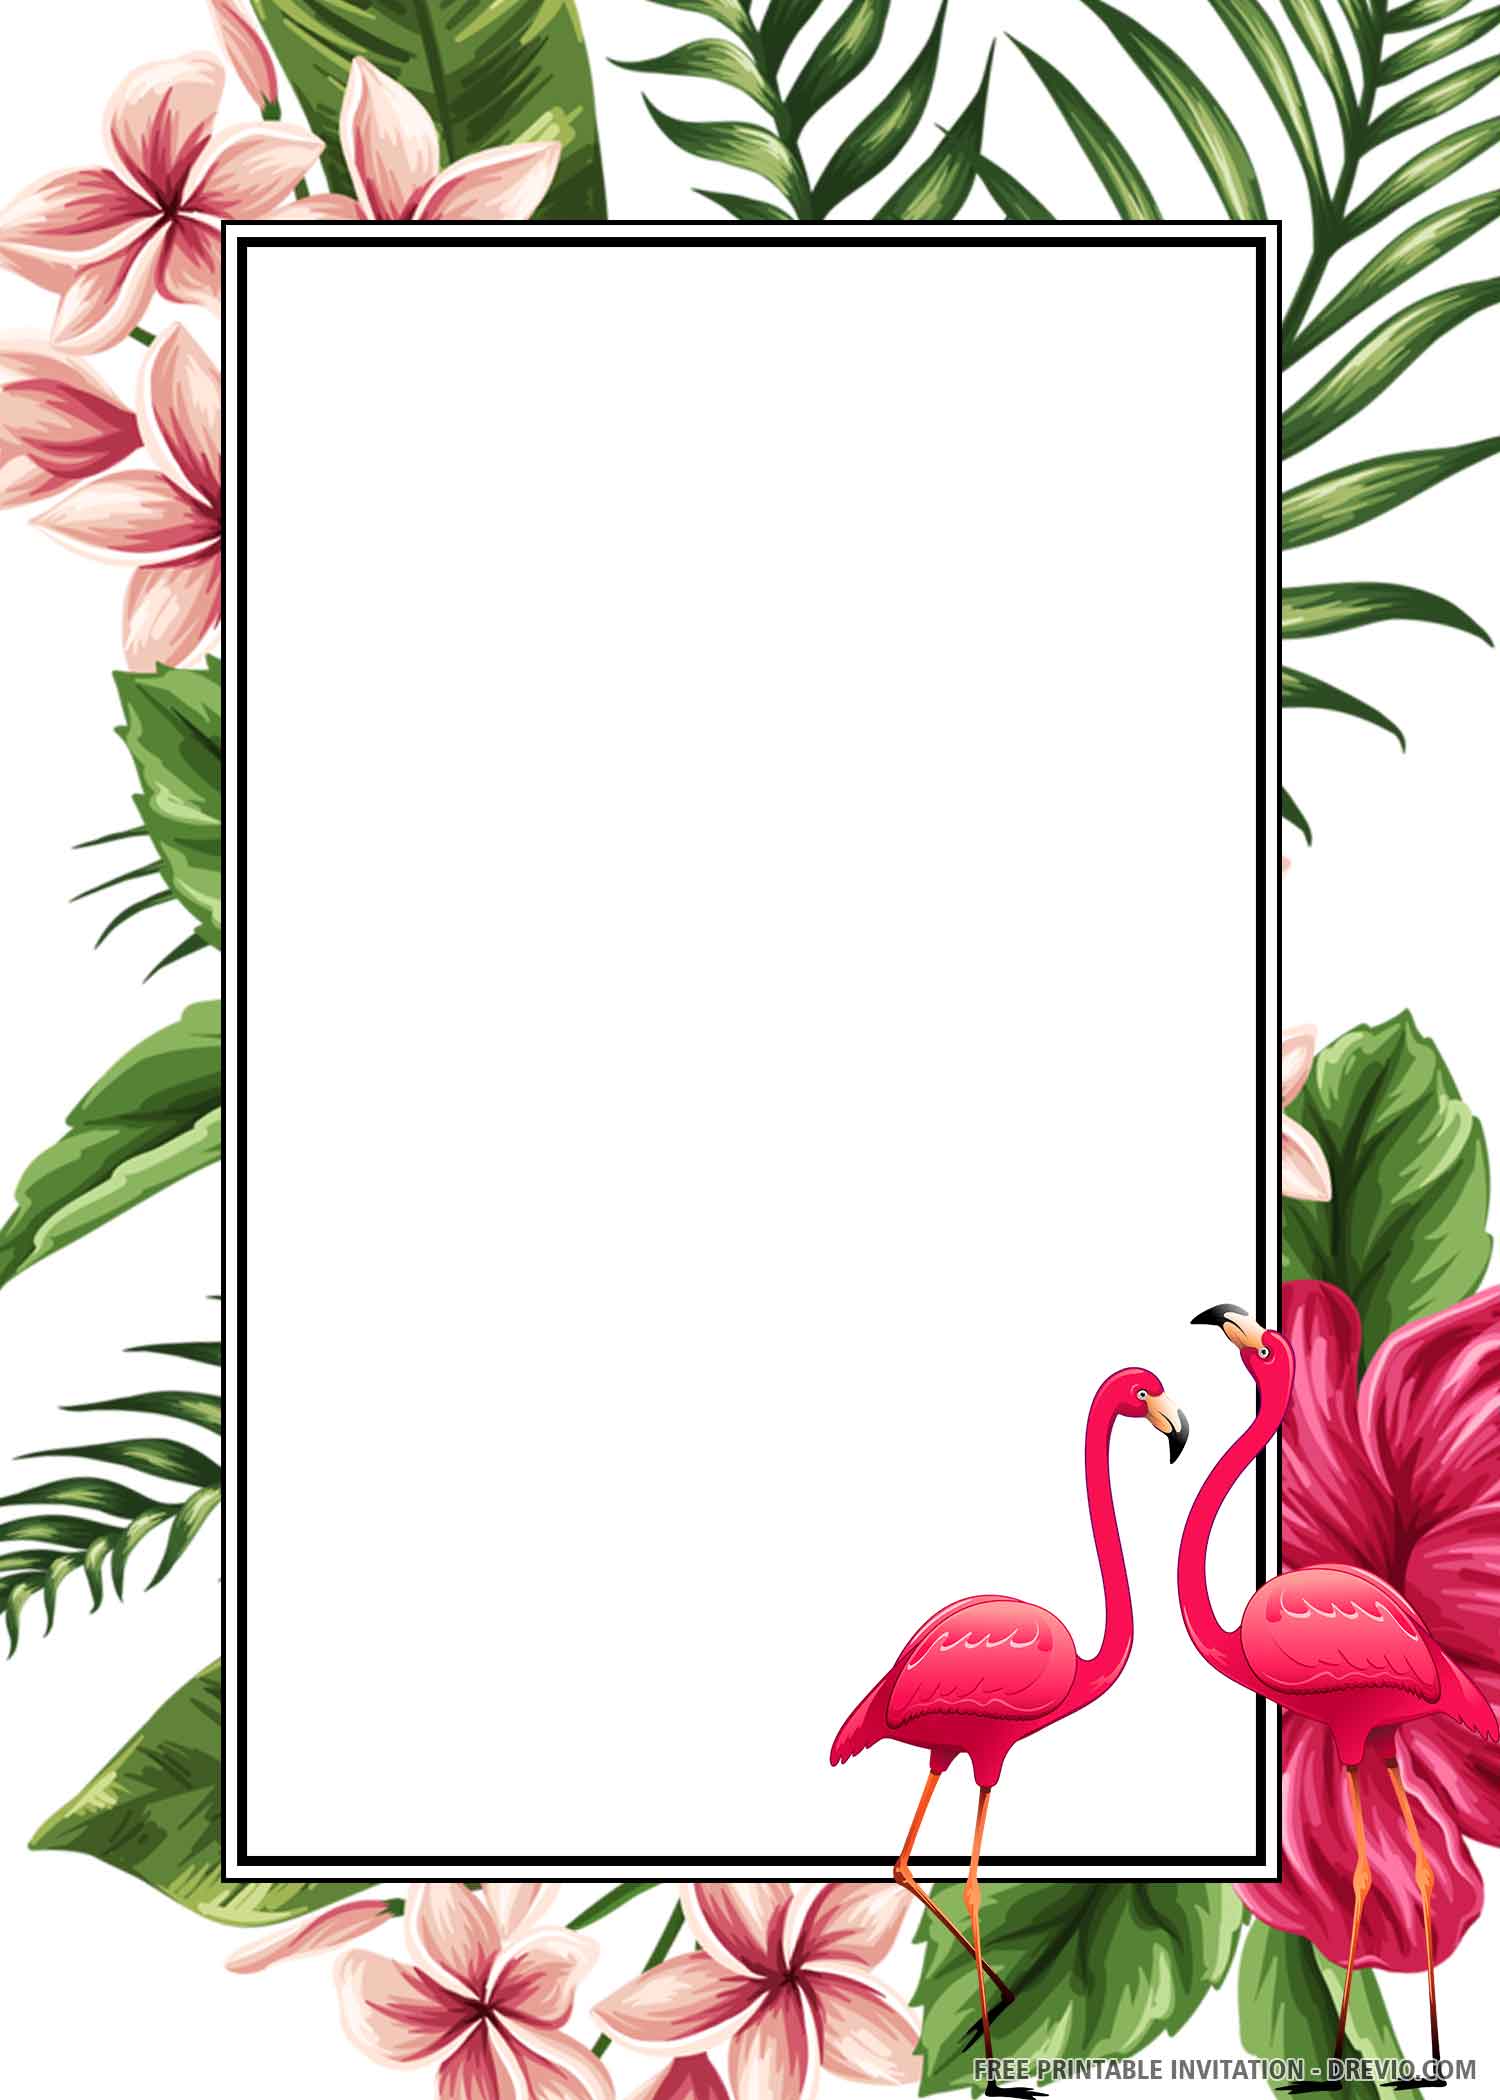 (FREE PRINTABLE) Watercolor Flamingo Tropical Flowers Birthday